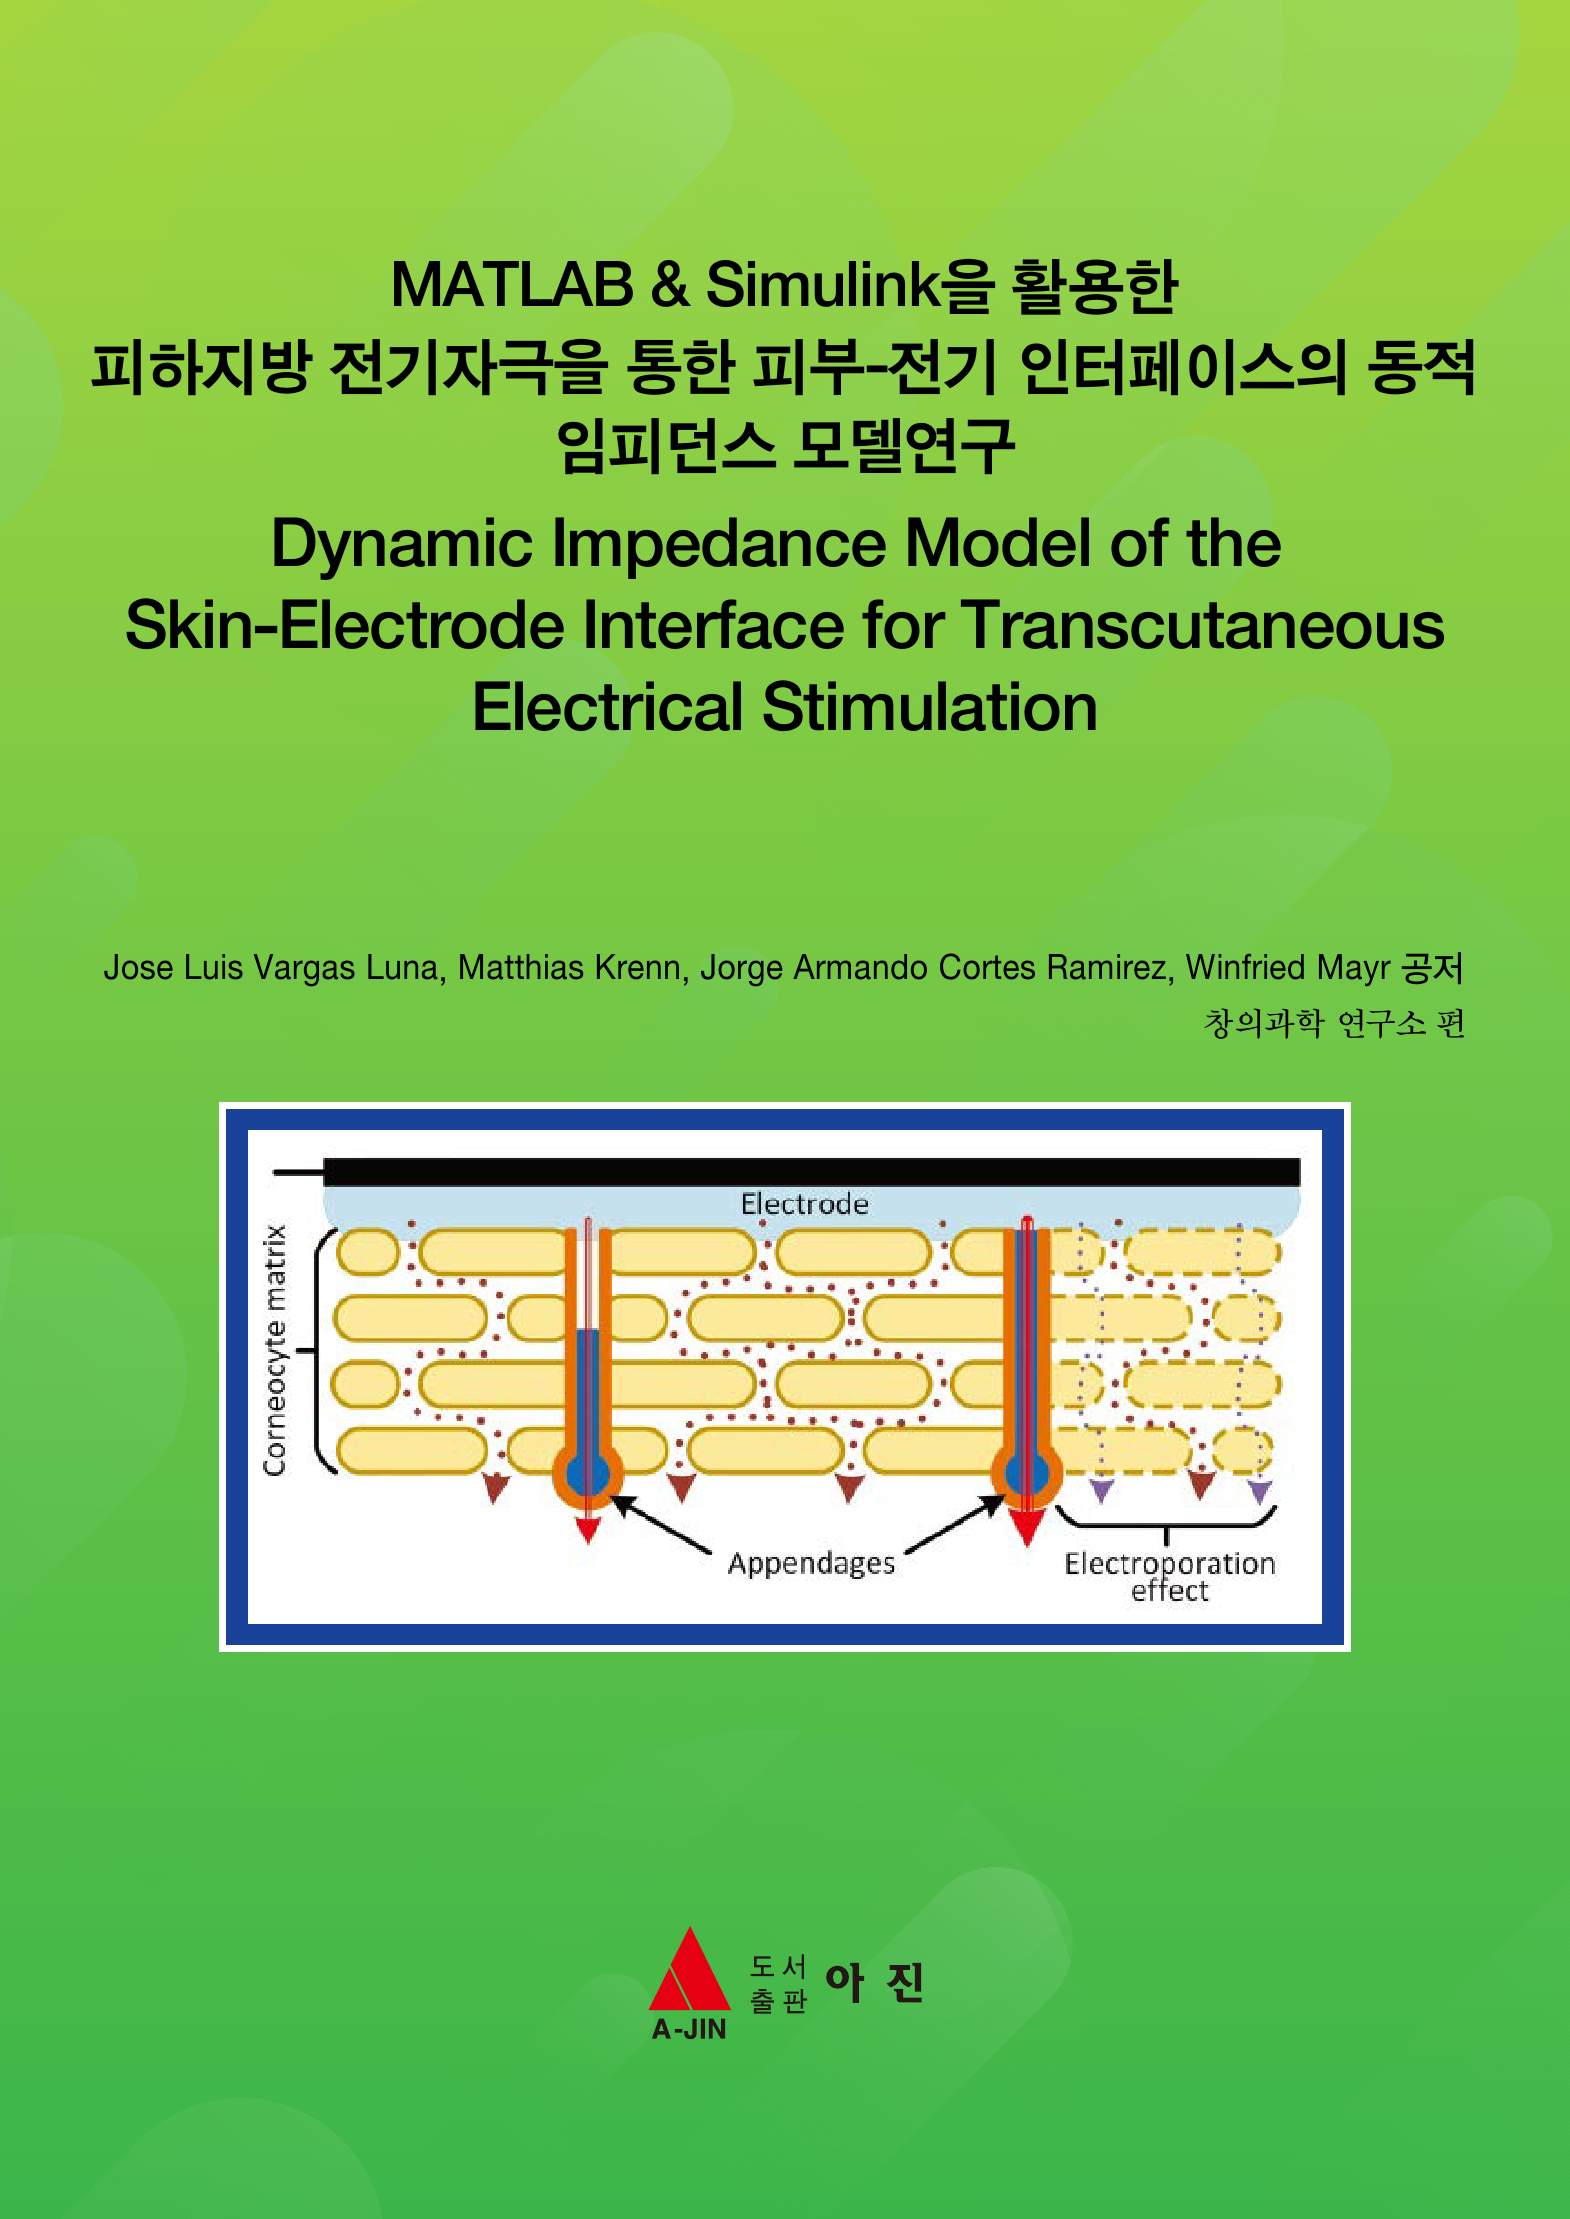 MATLAB & Simulink을 활용한 피하지방 전기자극을 통한 피부-전기 인터페이스의 동적 임피던스 모델연구(Dynamic Impedance Model of the Skin-Electrode Interface for Transcutaneous Electrical Stimulation)